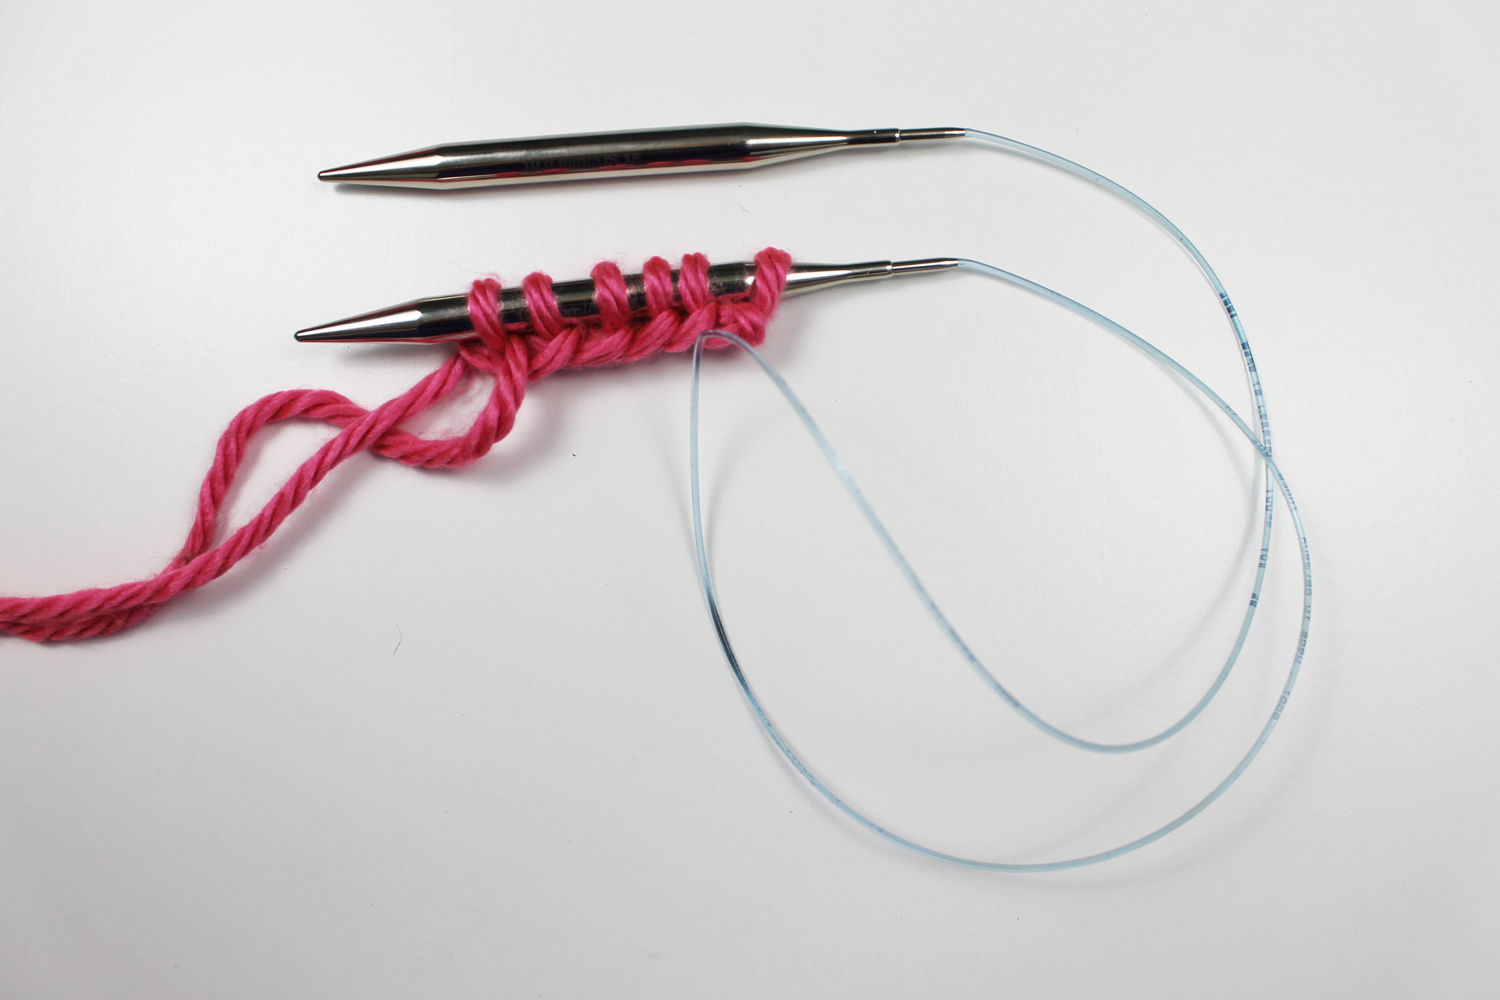 Knitting magic loop two at a time